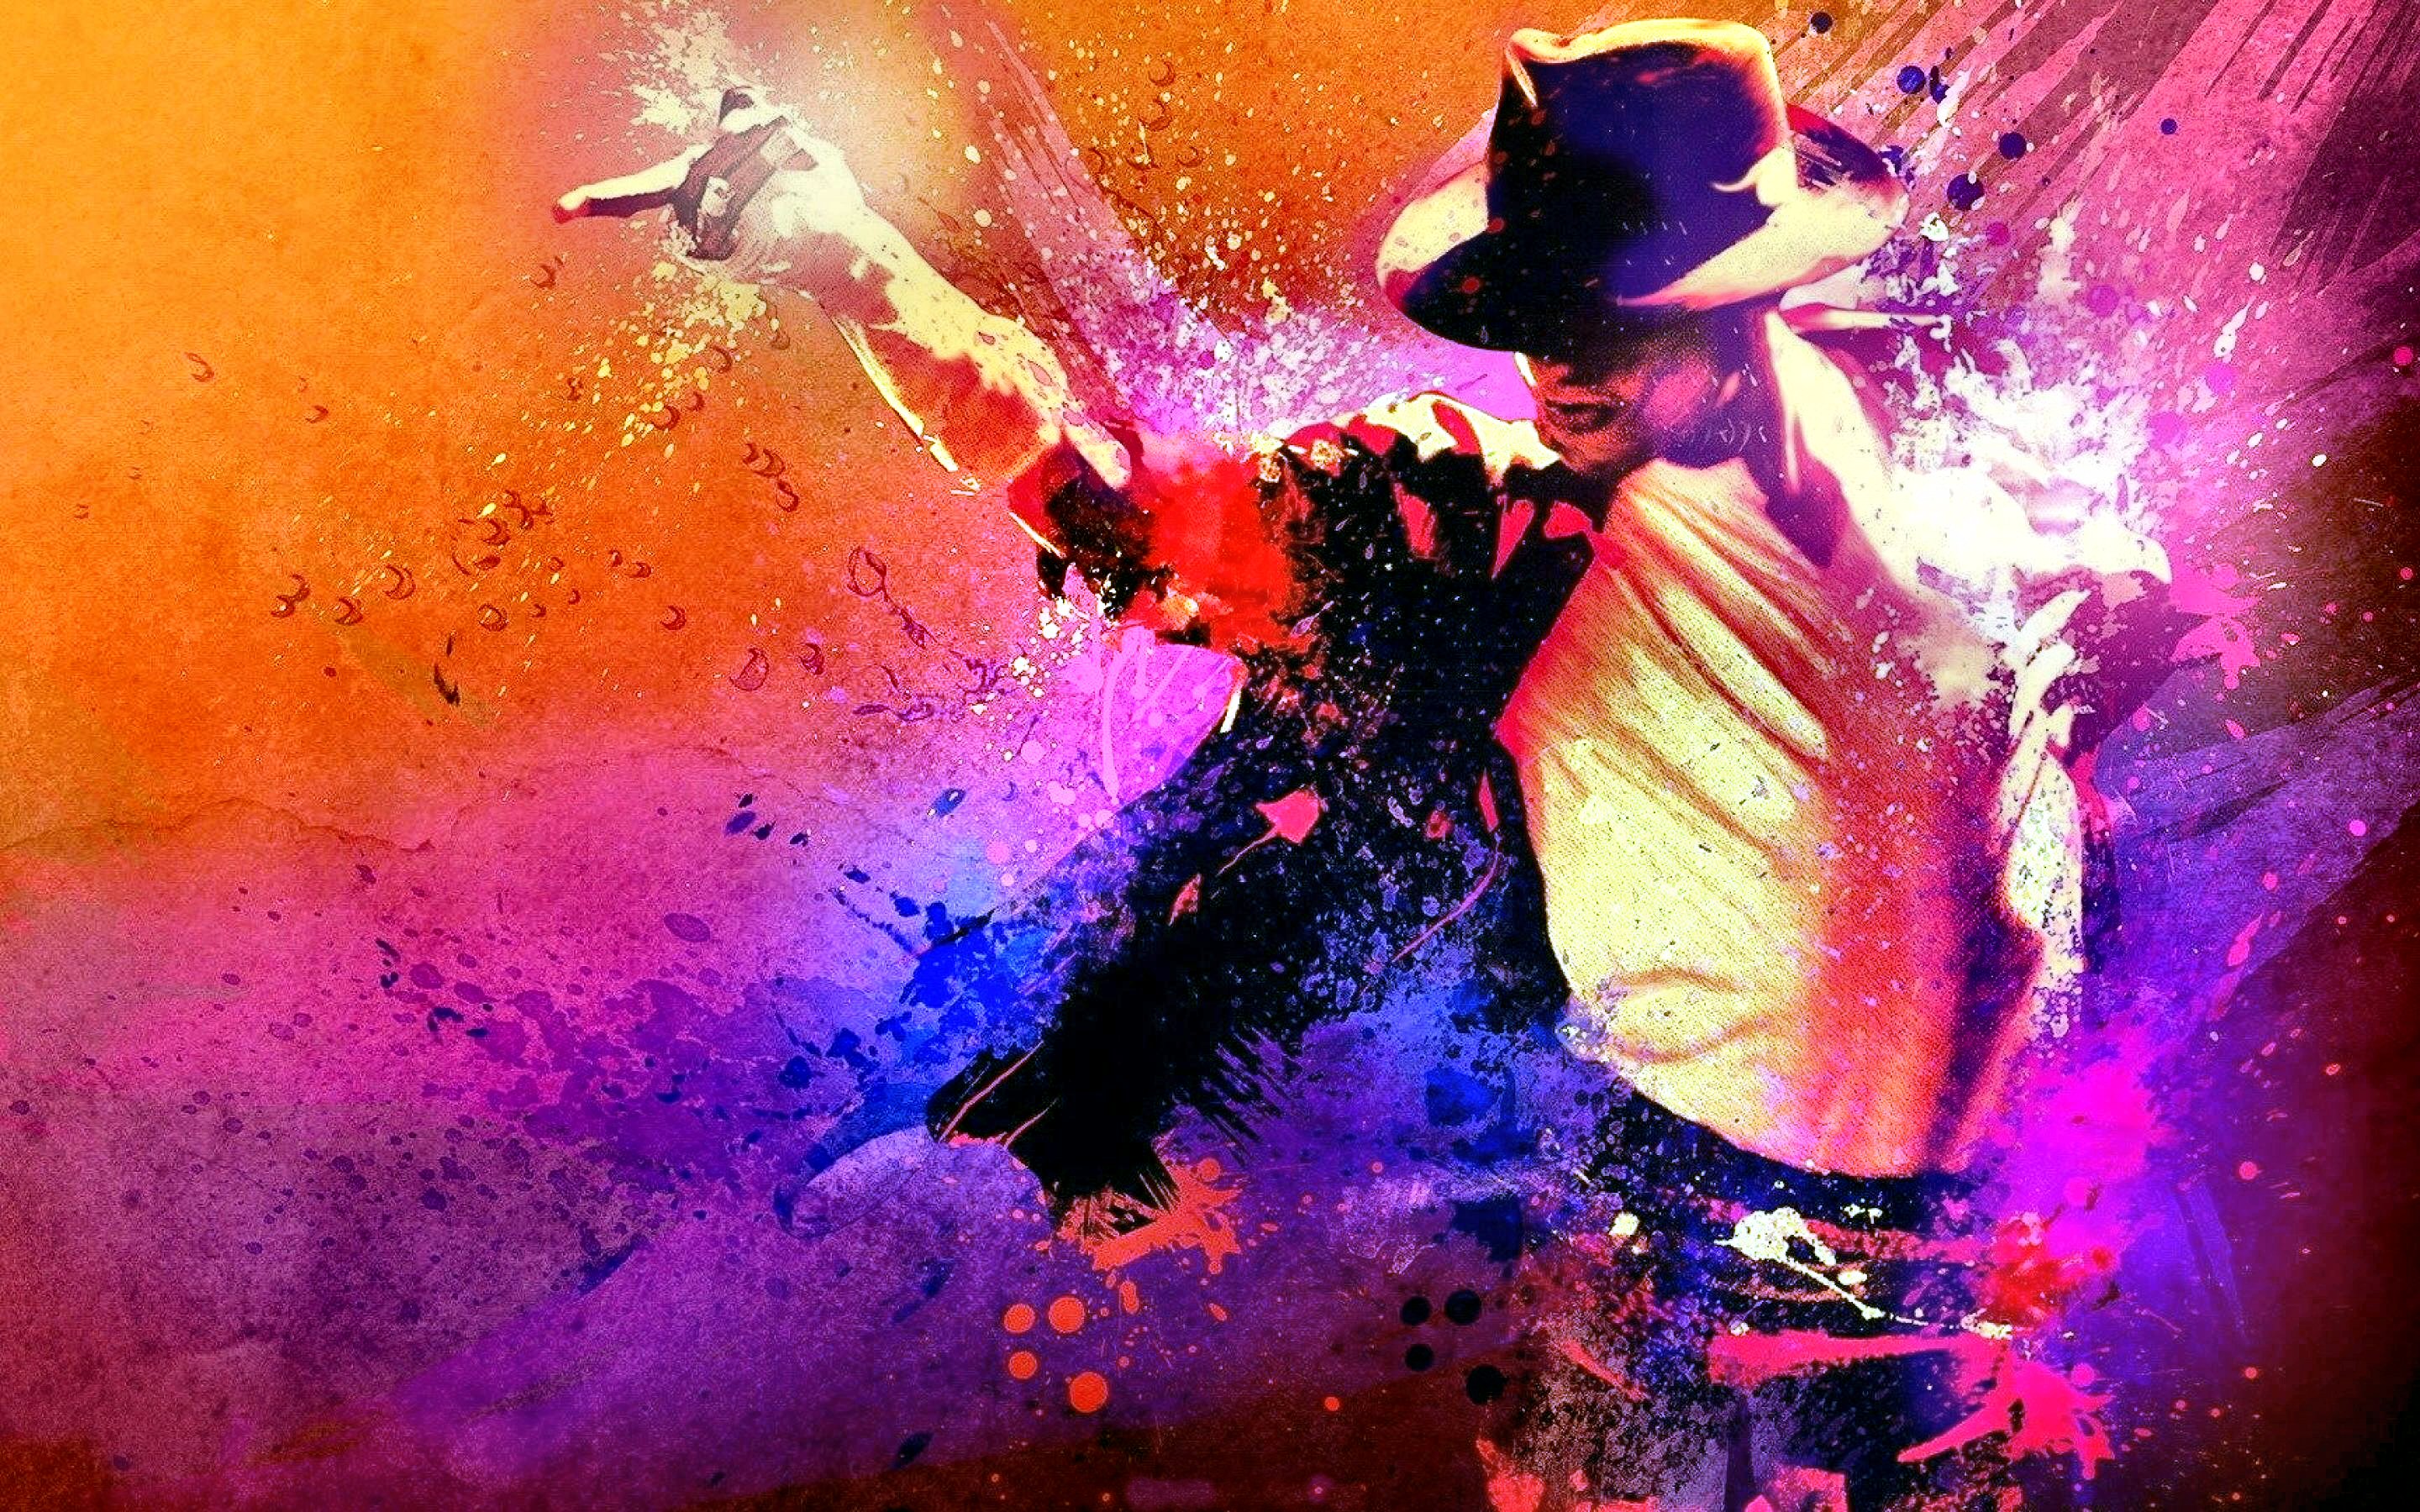 Michael Jackson Wallpapers HD colorful